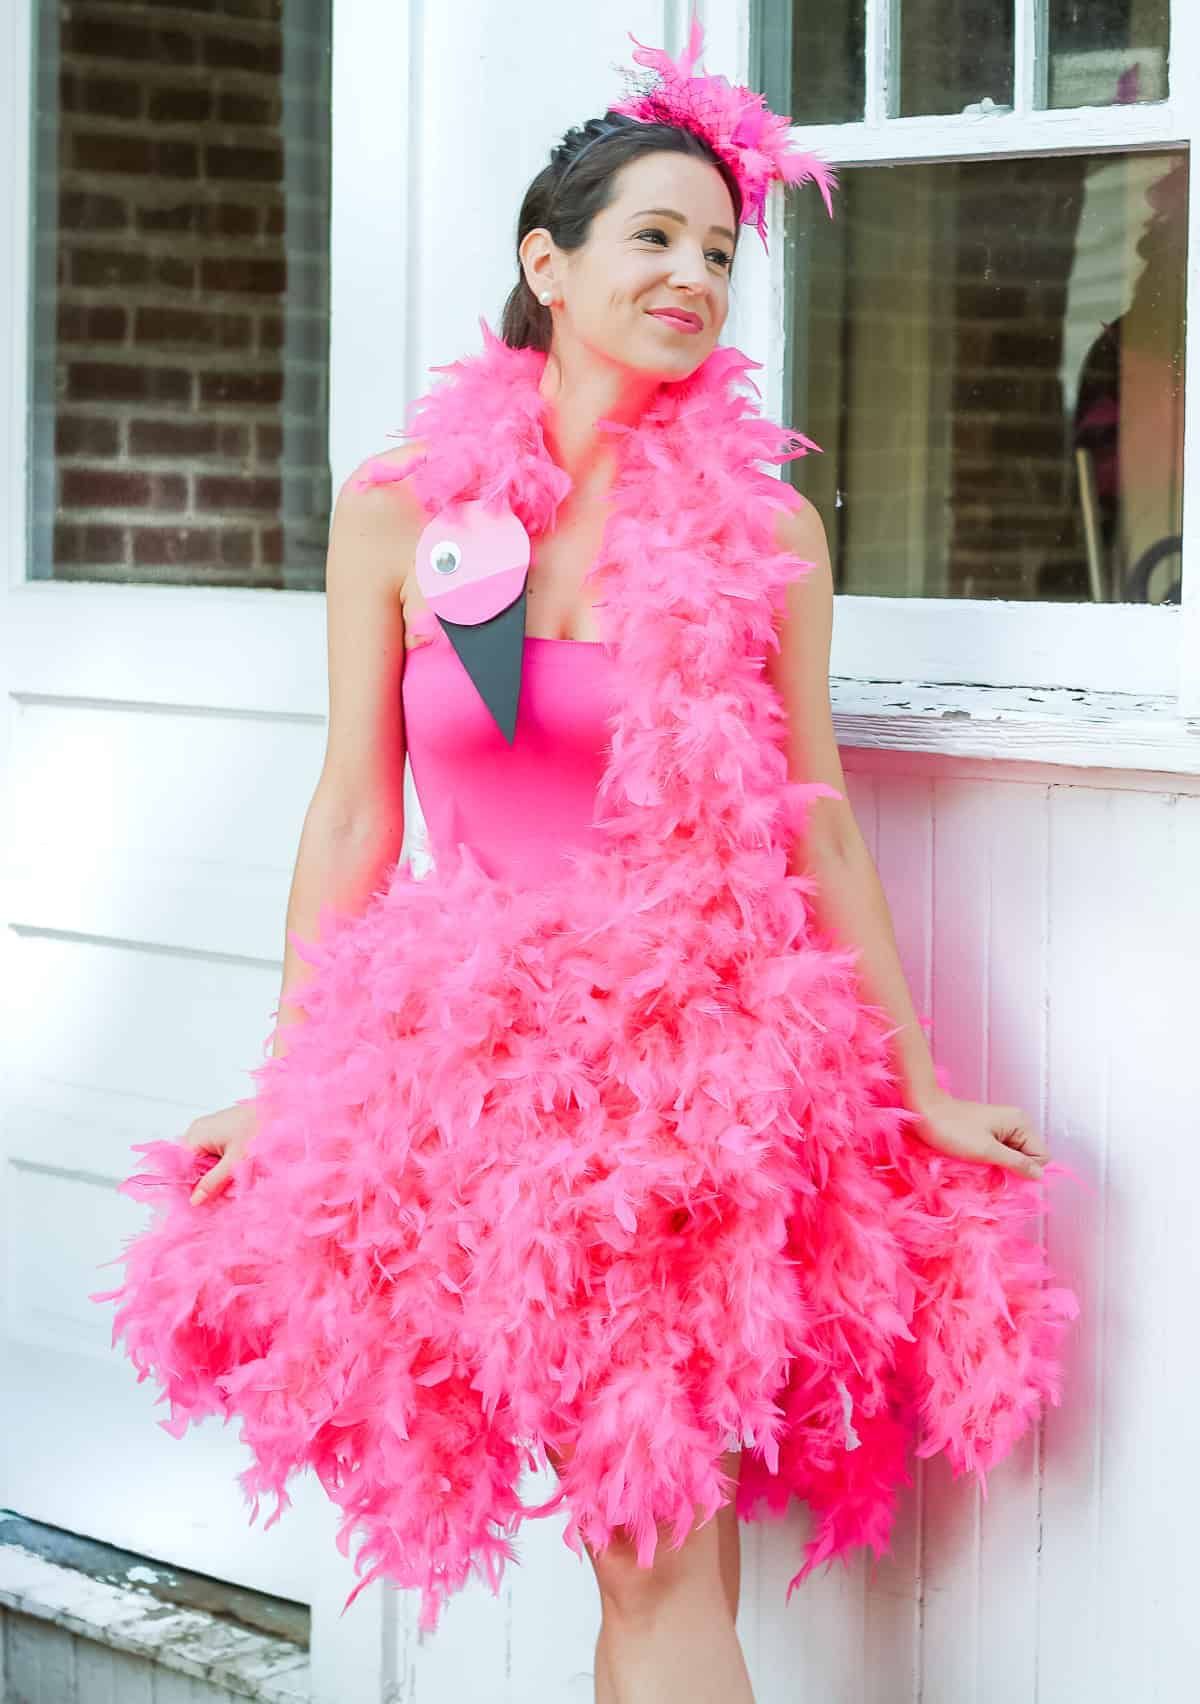 Diy flamingo costume for halloween